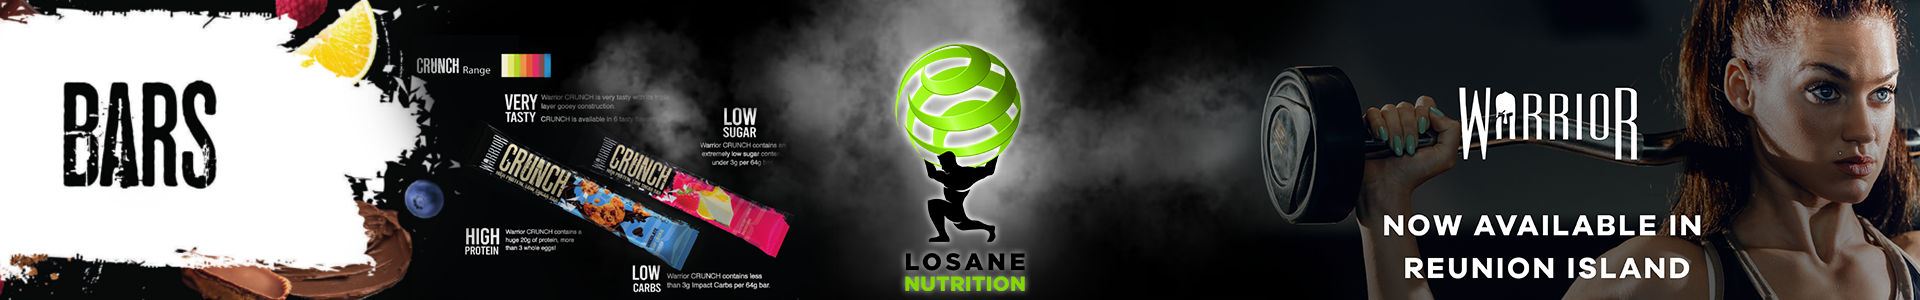 Losane-Nutrition